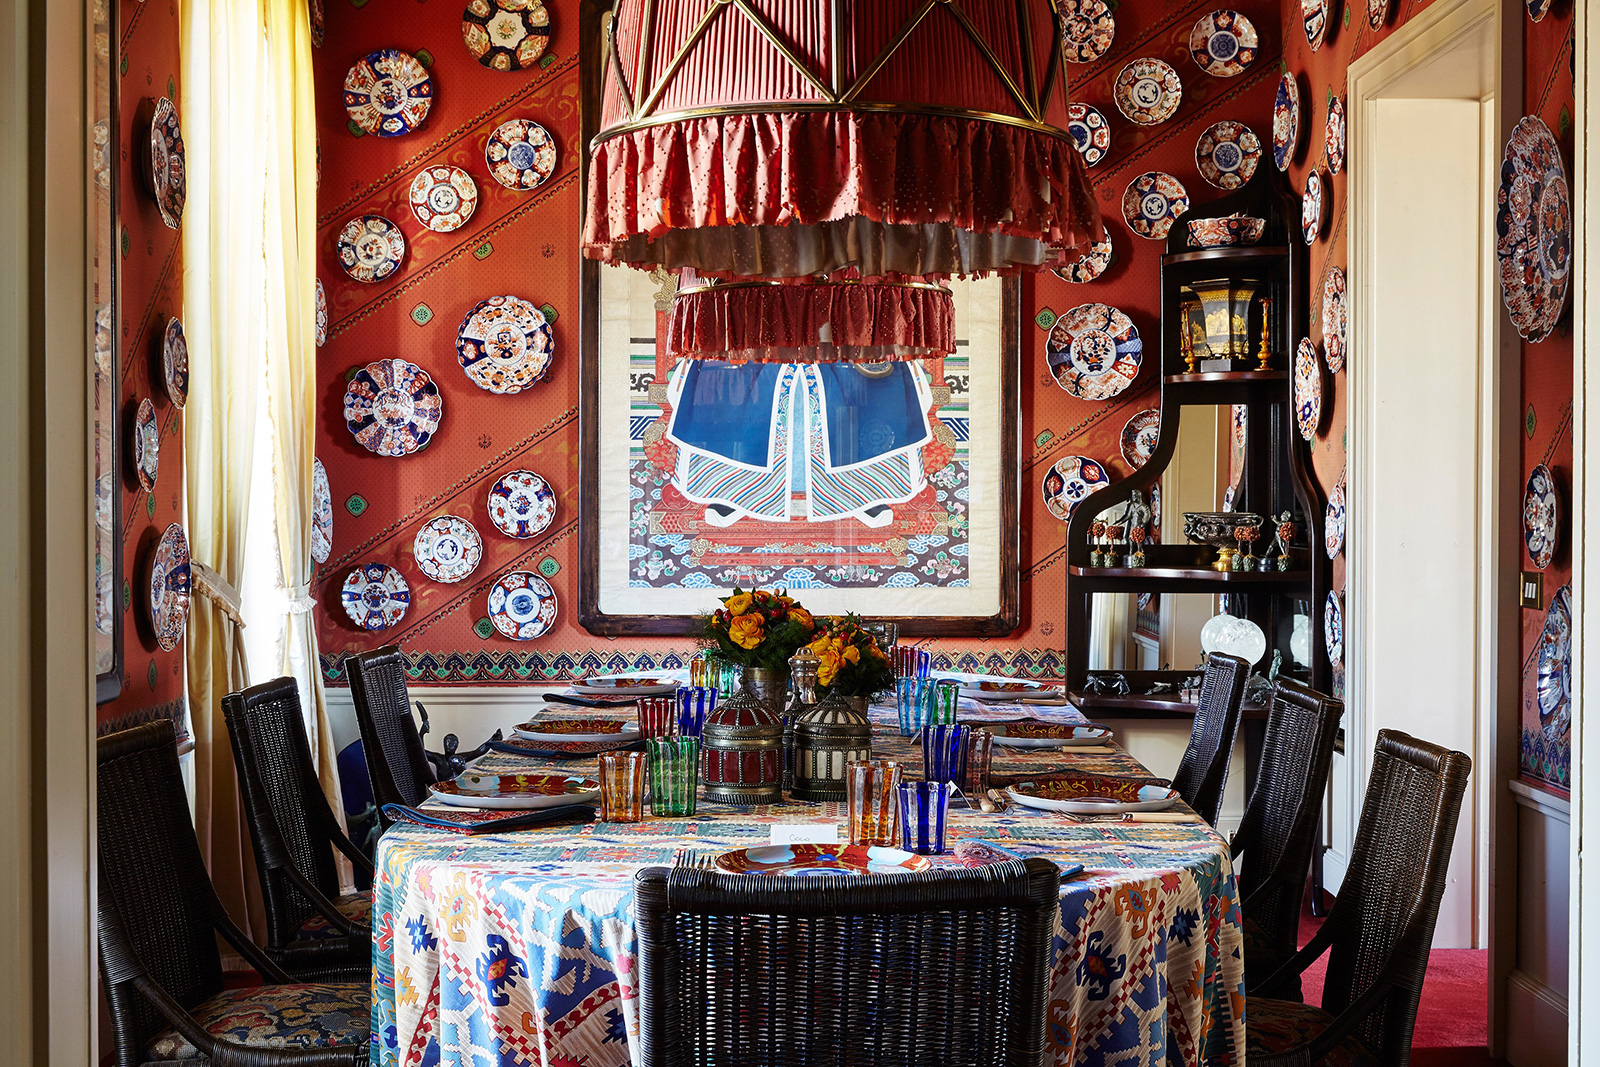 Cabana Magazine founder Martina Mondadori's dining room